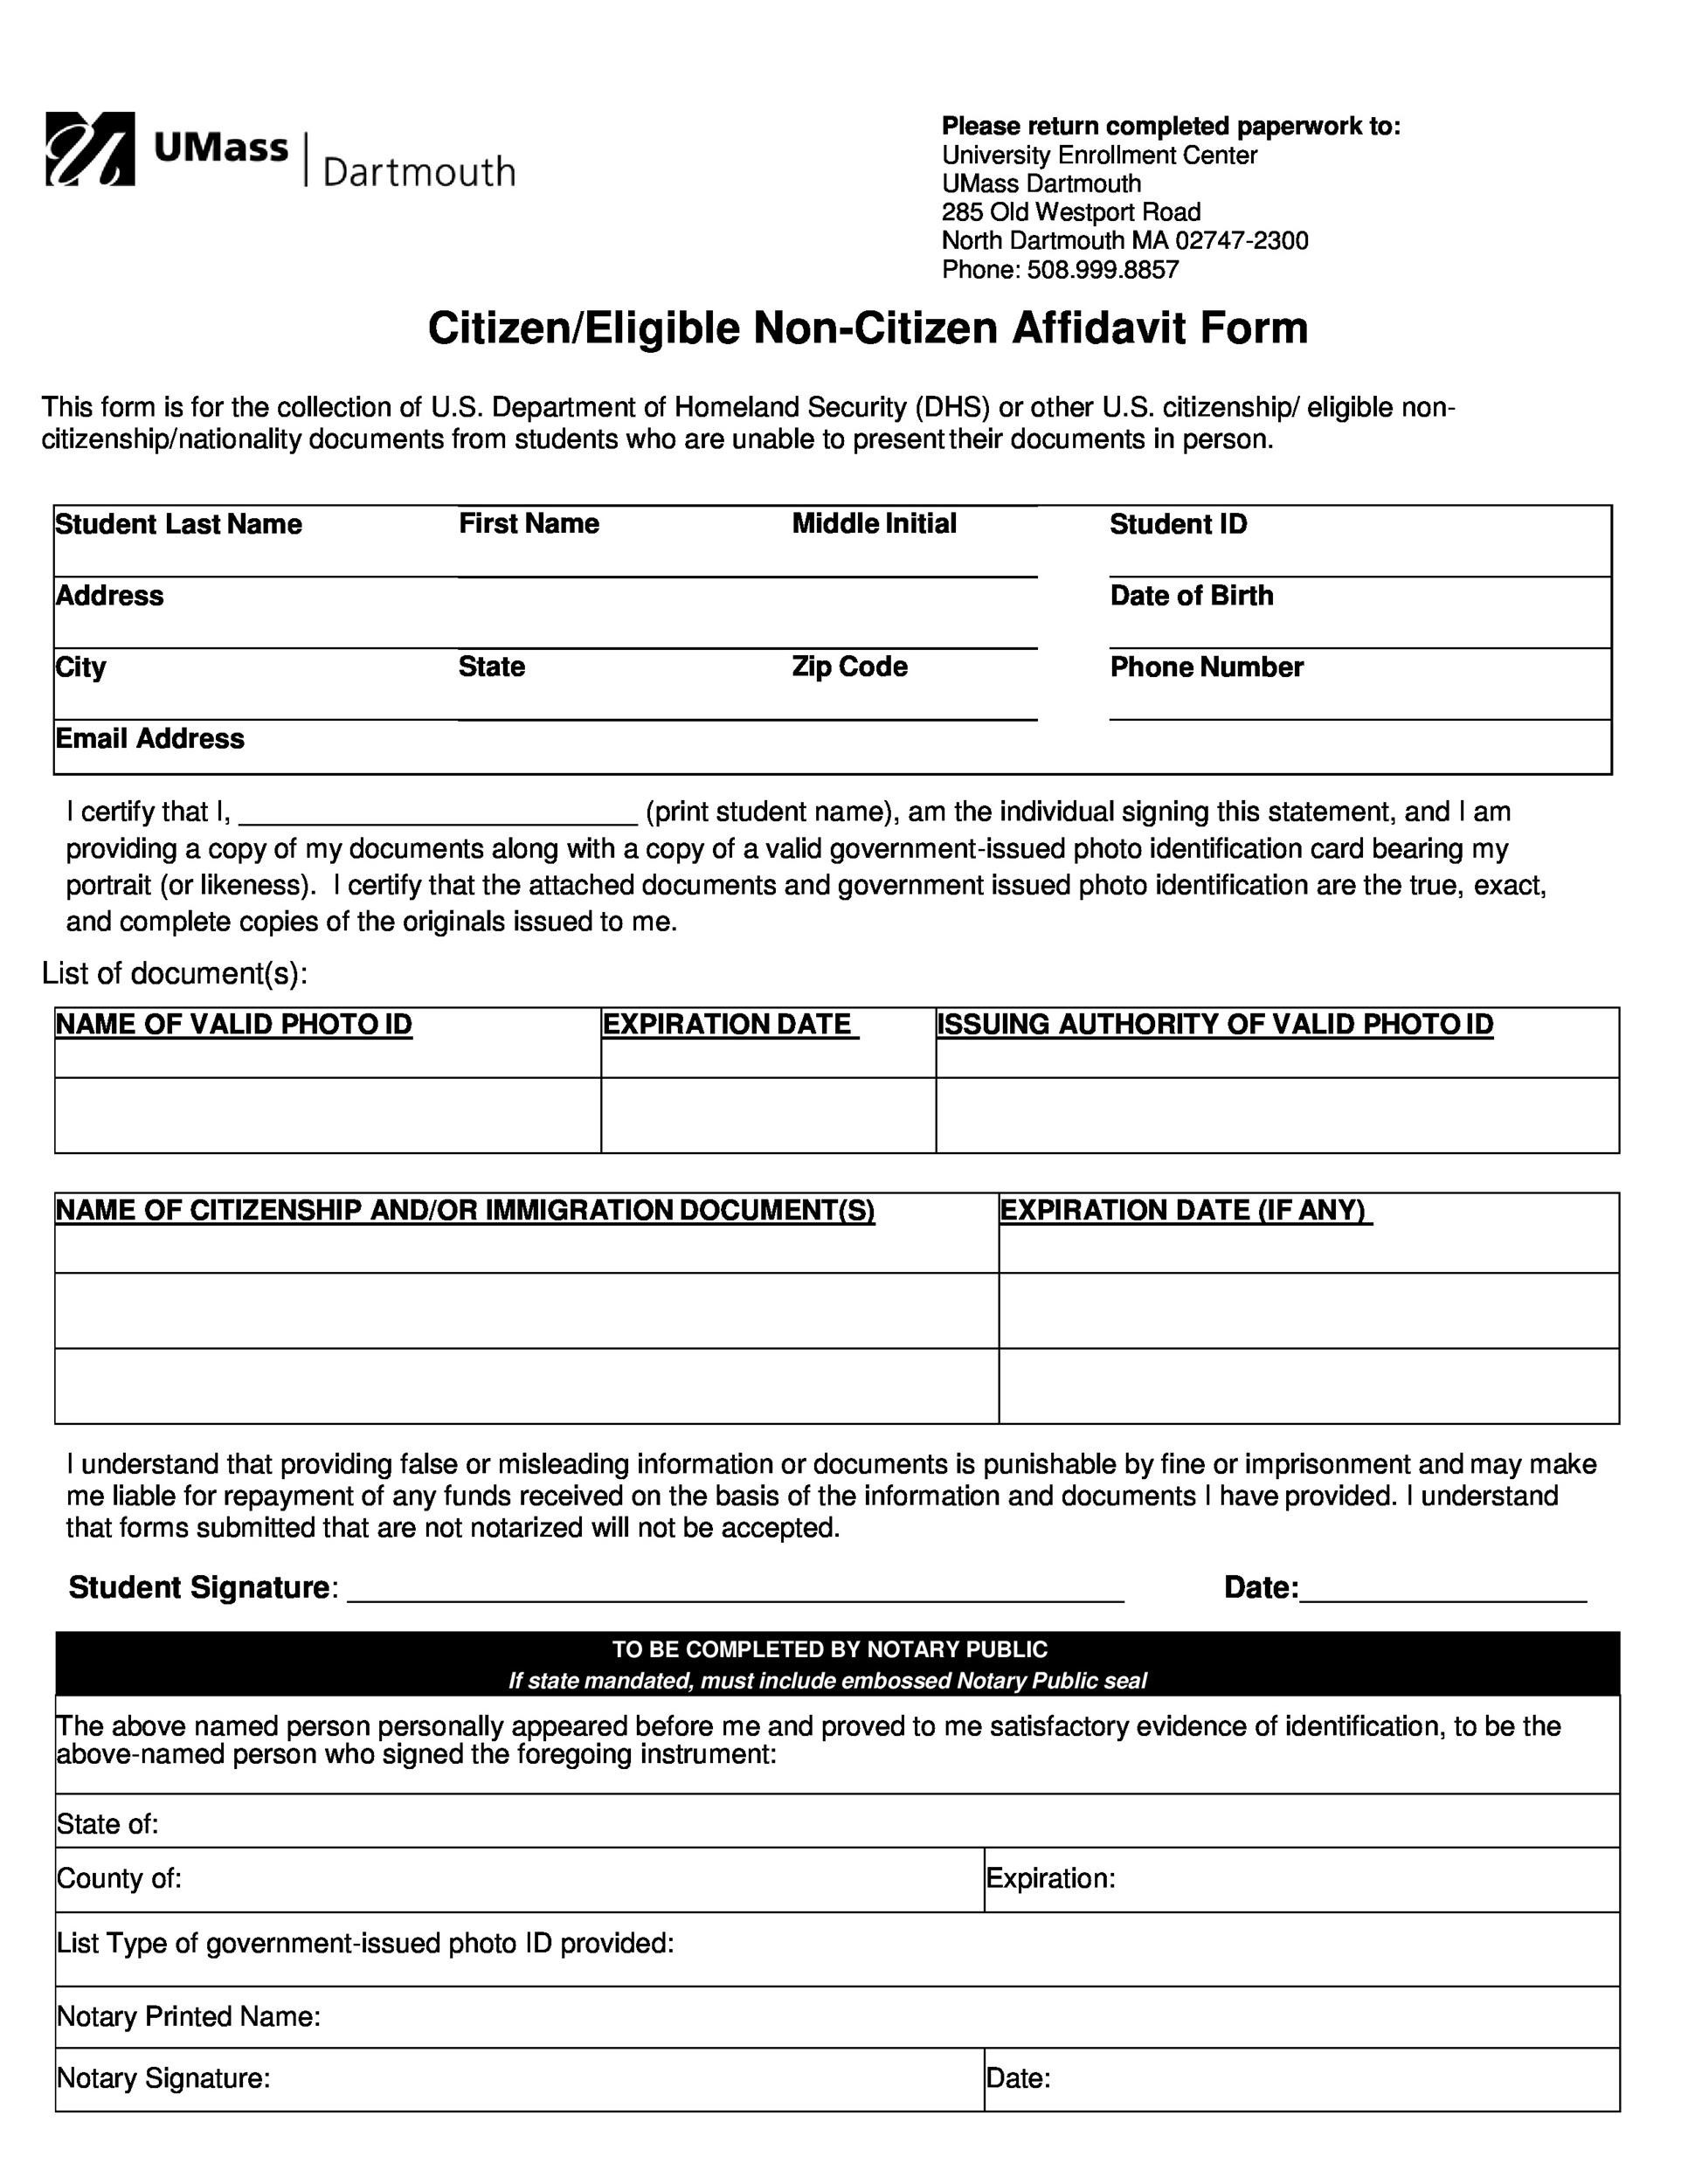 Free affidavit form 16